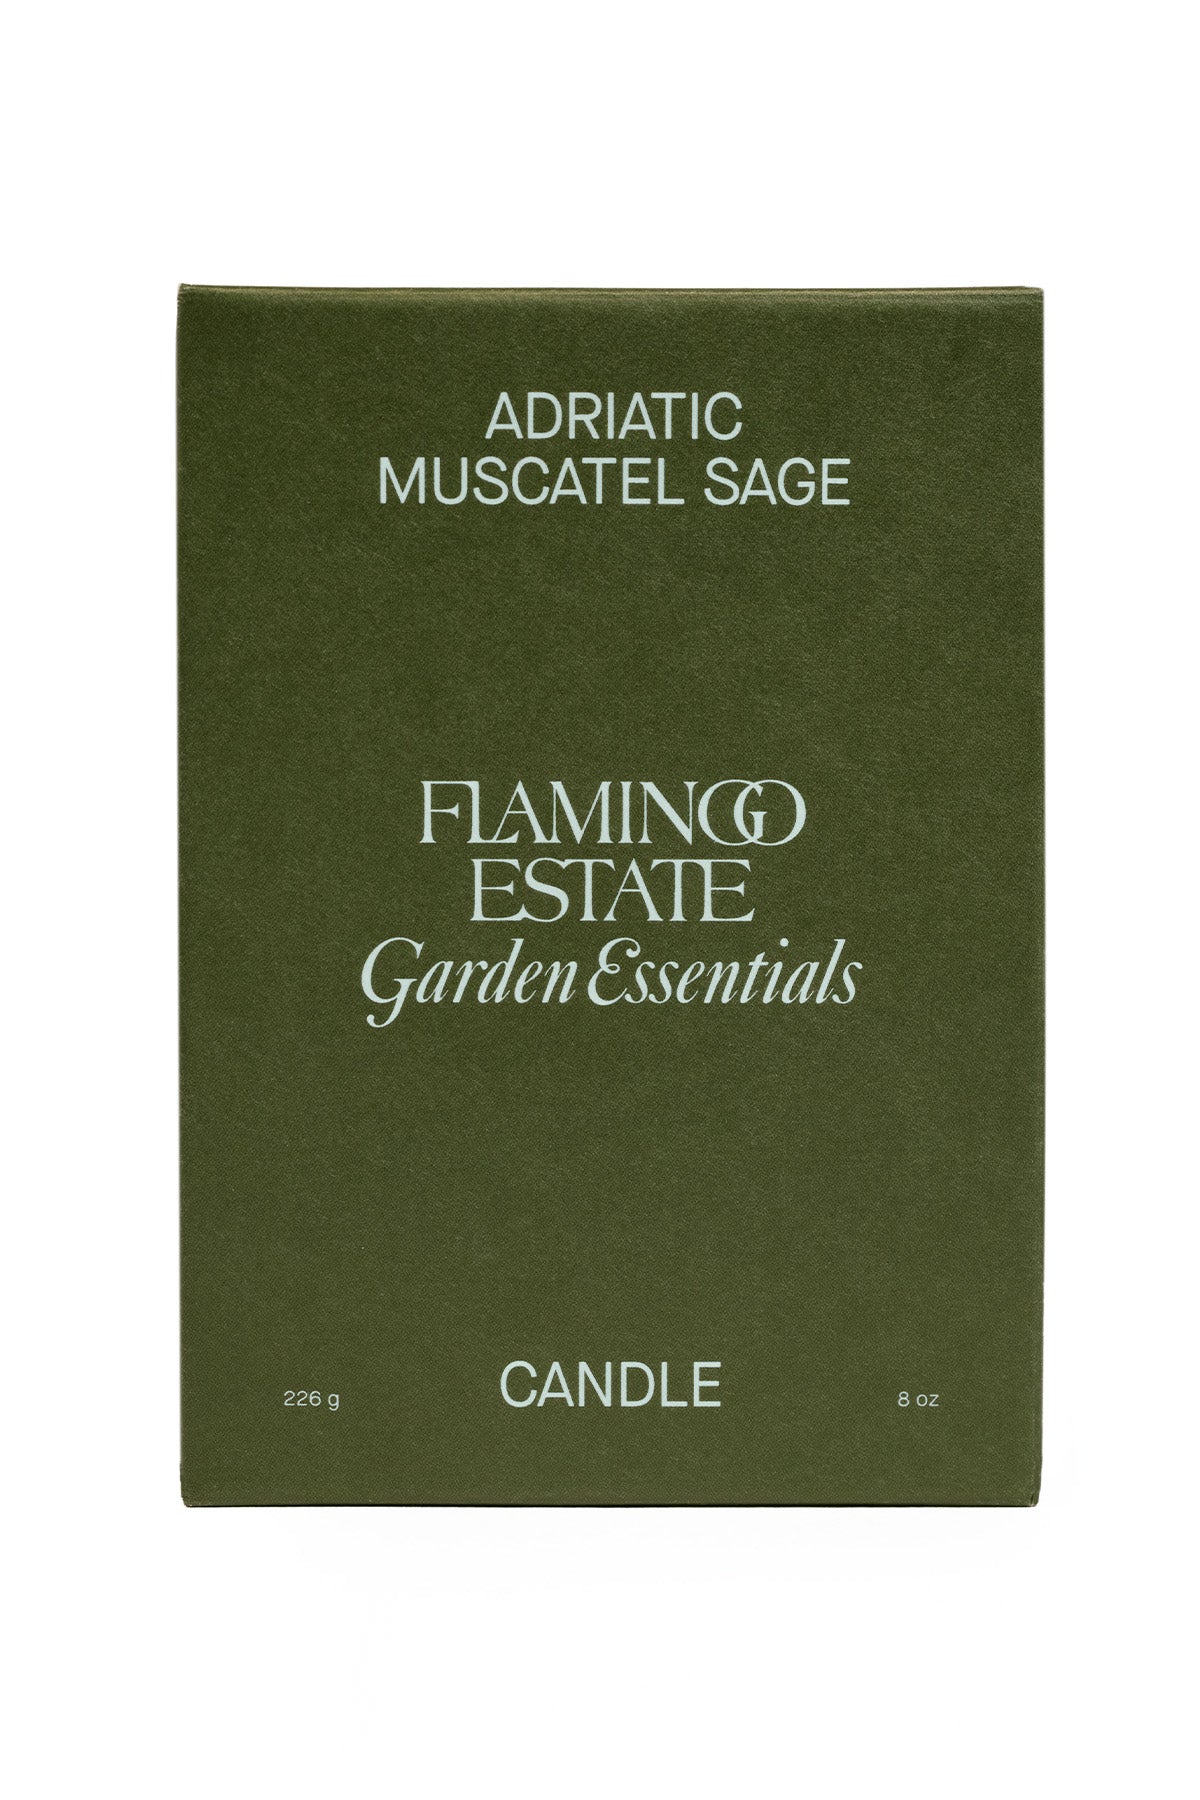 FLAMINGO ESTATE | ADRIATIC MUSCATEL SAGE CANDLE